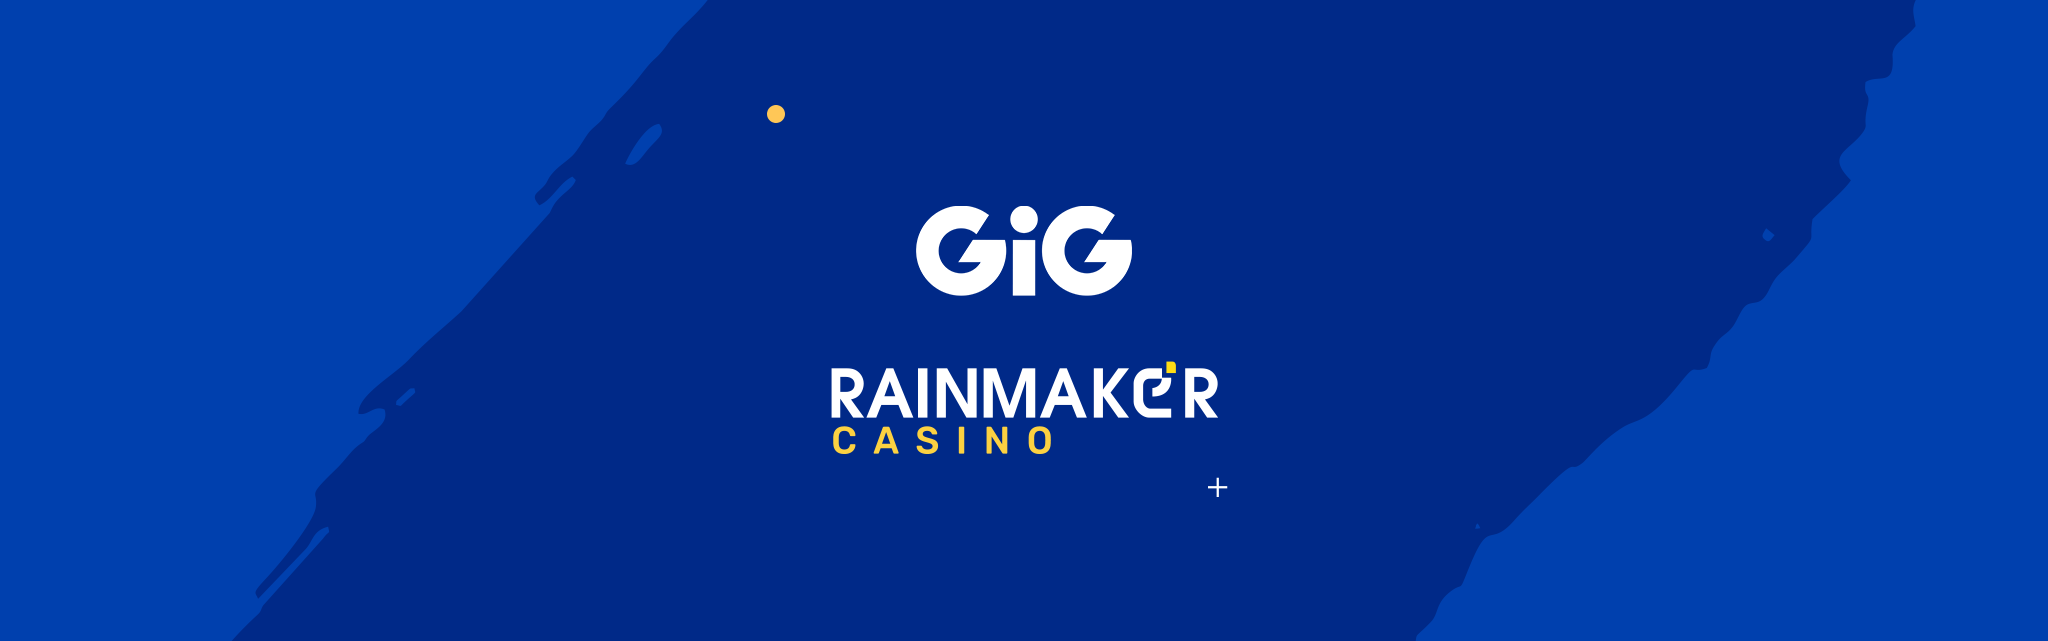 GiG_Rainmaker